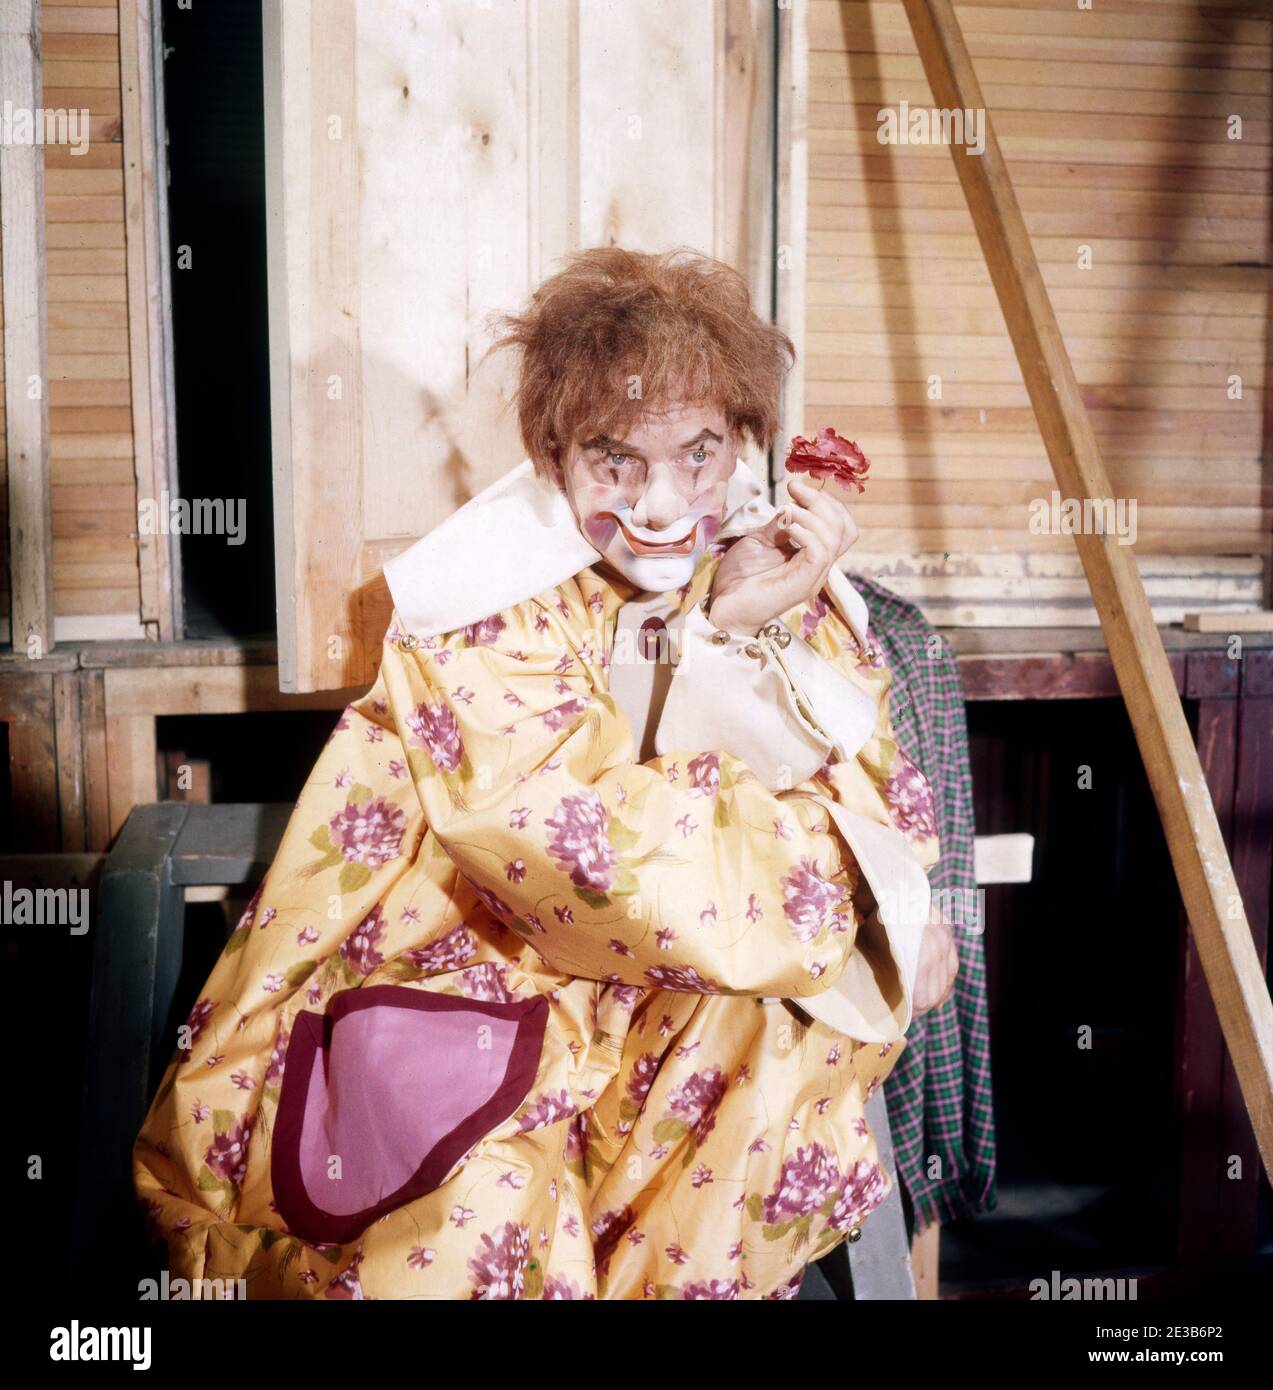 Paul Edwin Roth als Clown Heino in Der Tod auf dem Rummelplatz, Regie: Joachim Hess, 1958. Paul Edwin Roth as Heino the Clown in Der Tod auf dem Rummelplatz, Director: Joachim Hess, 1958. Stock Photo